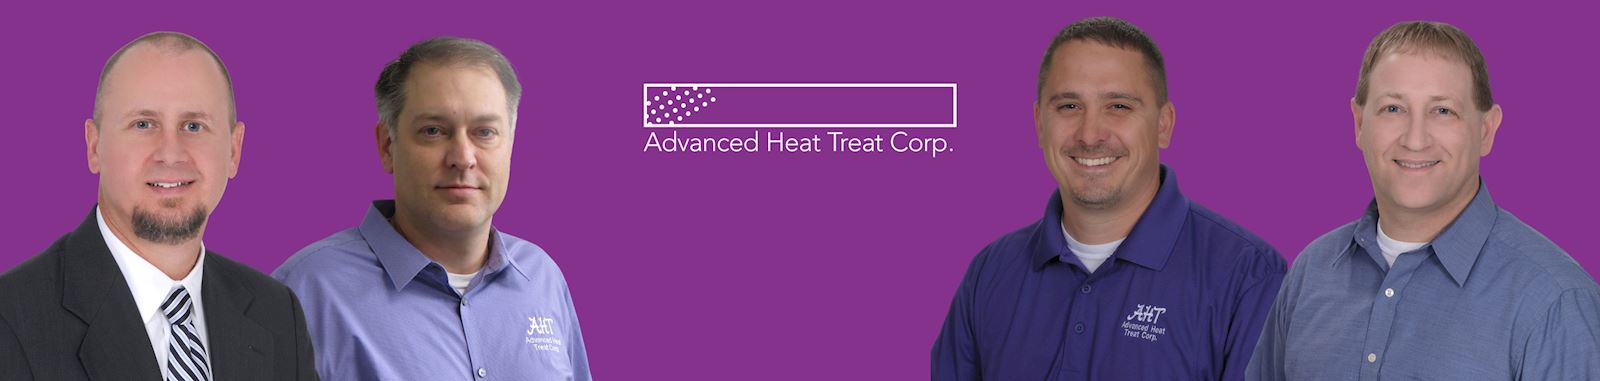 Advanced Heat Treat Corp. Sales Team